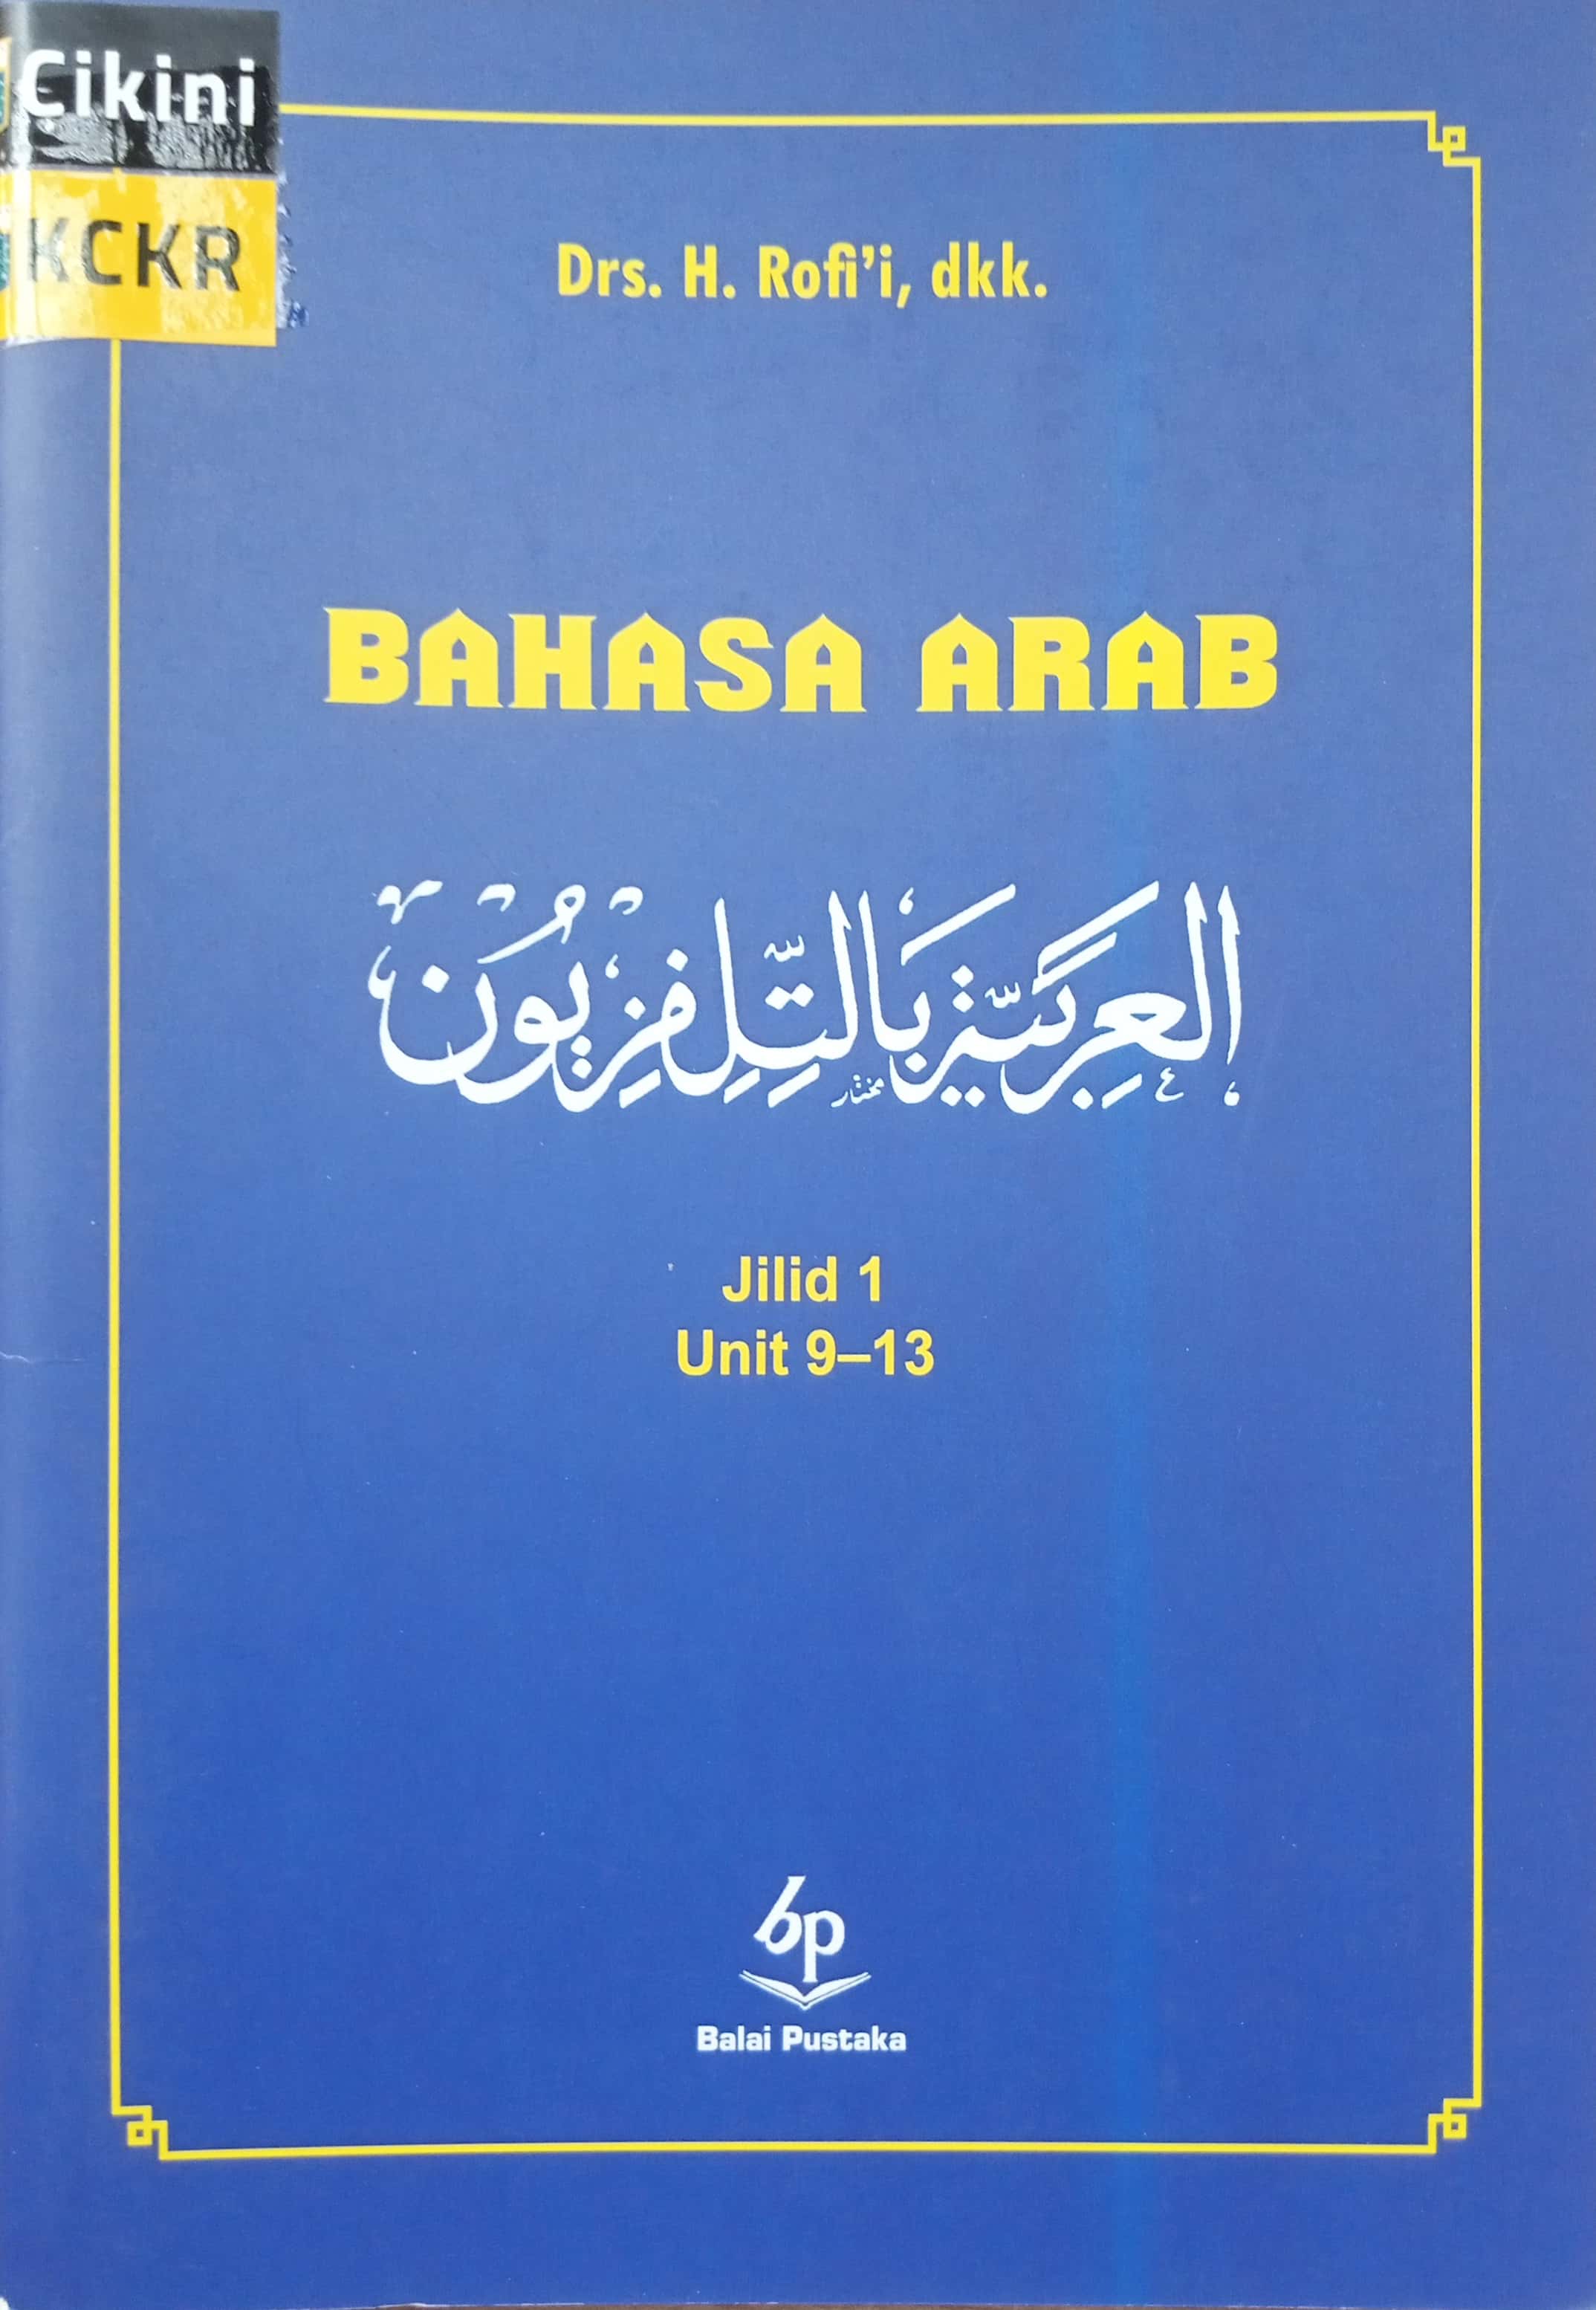 Bahasa Arab jilid 1 unit 9-13